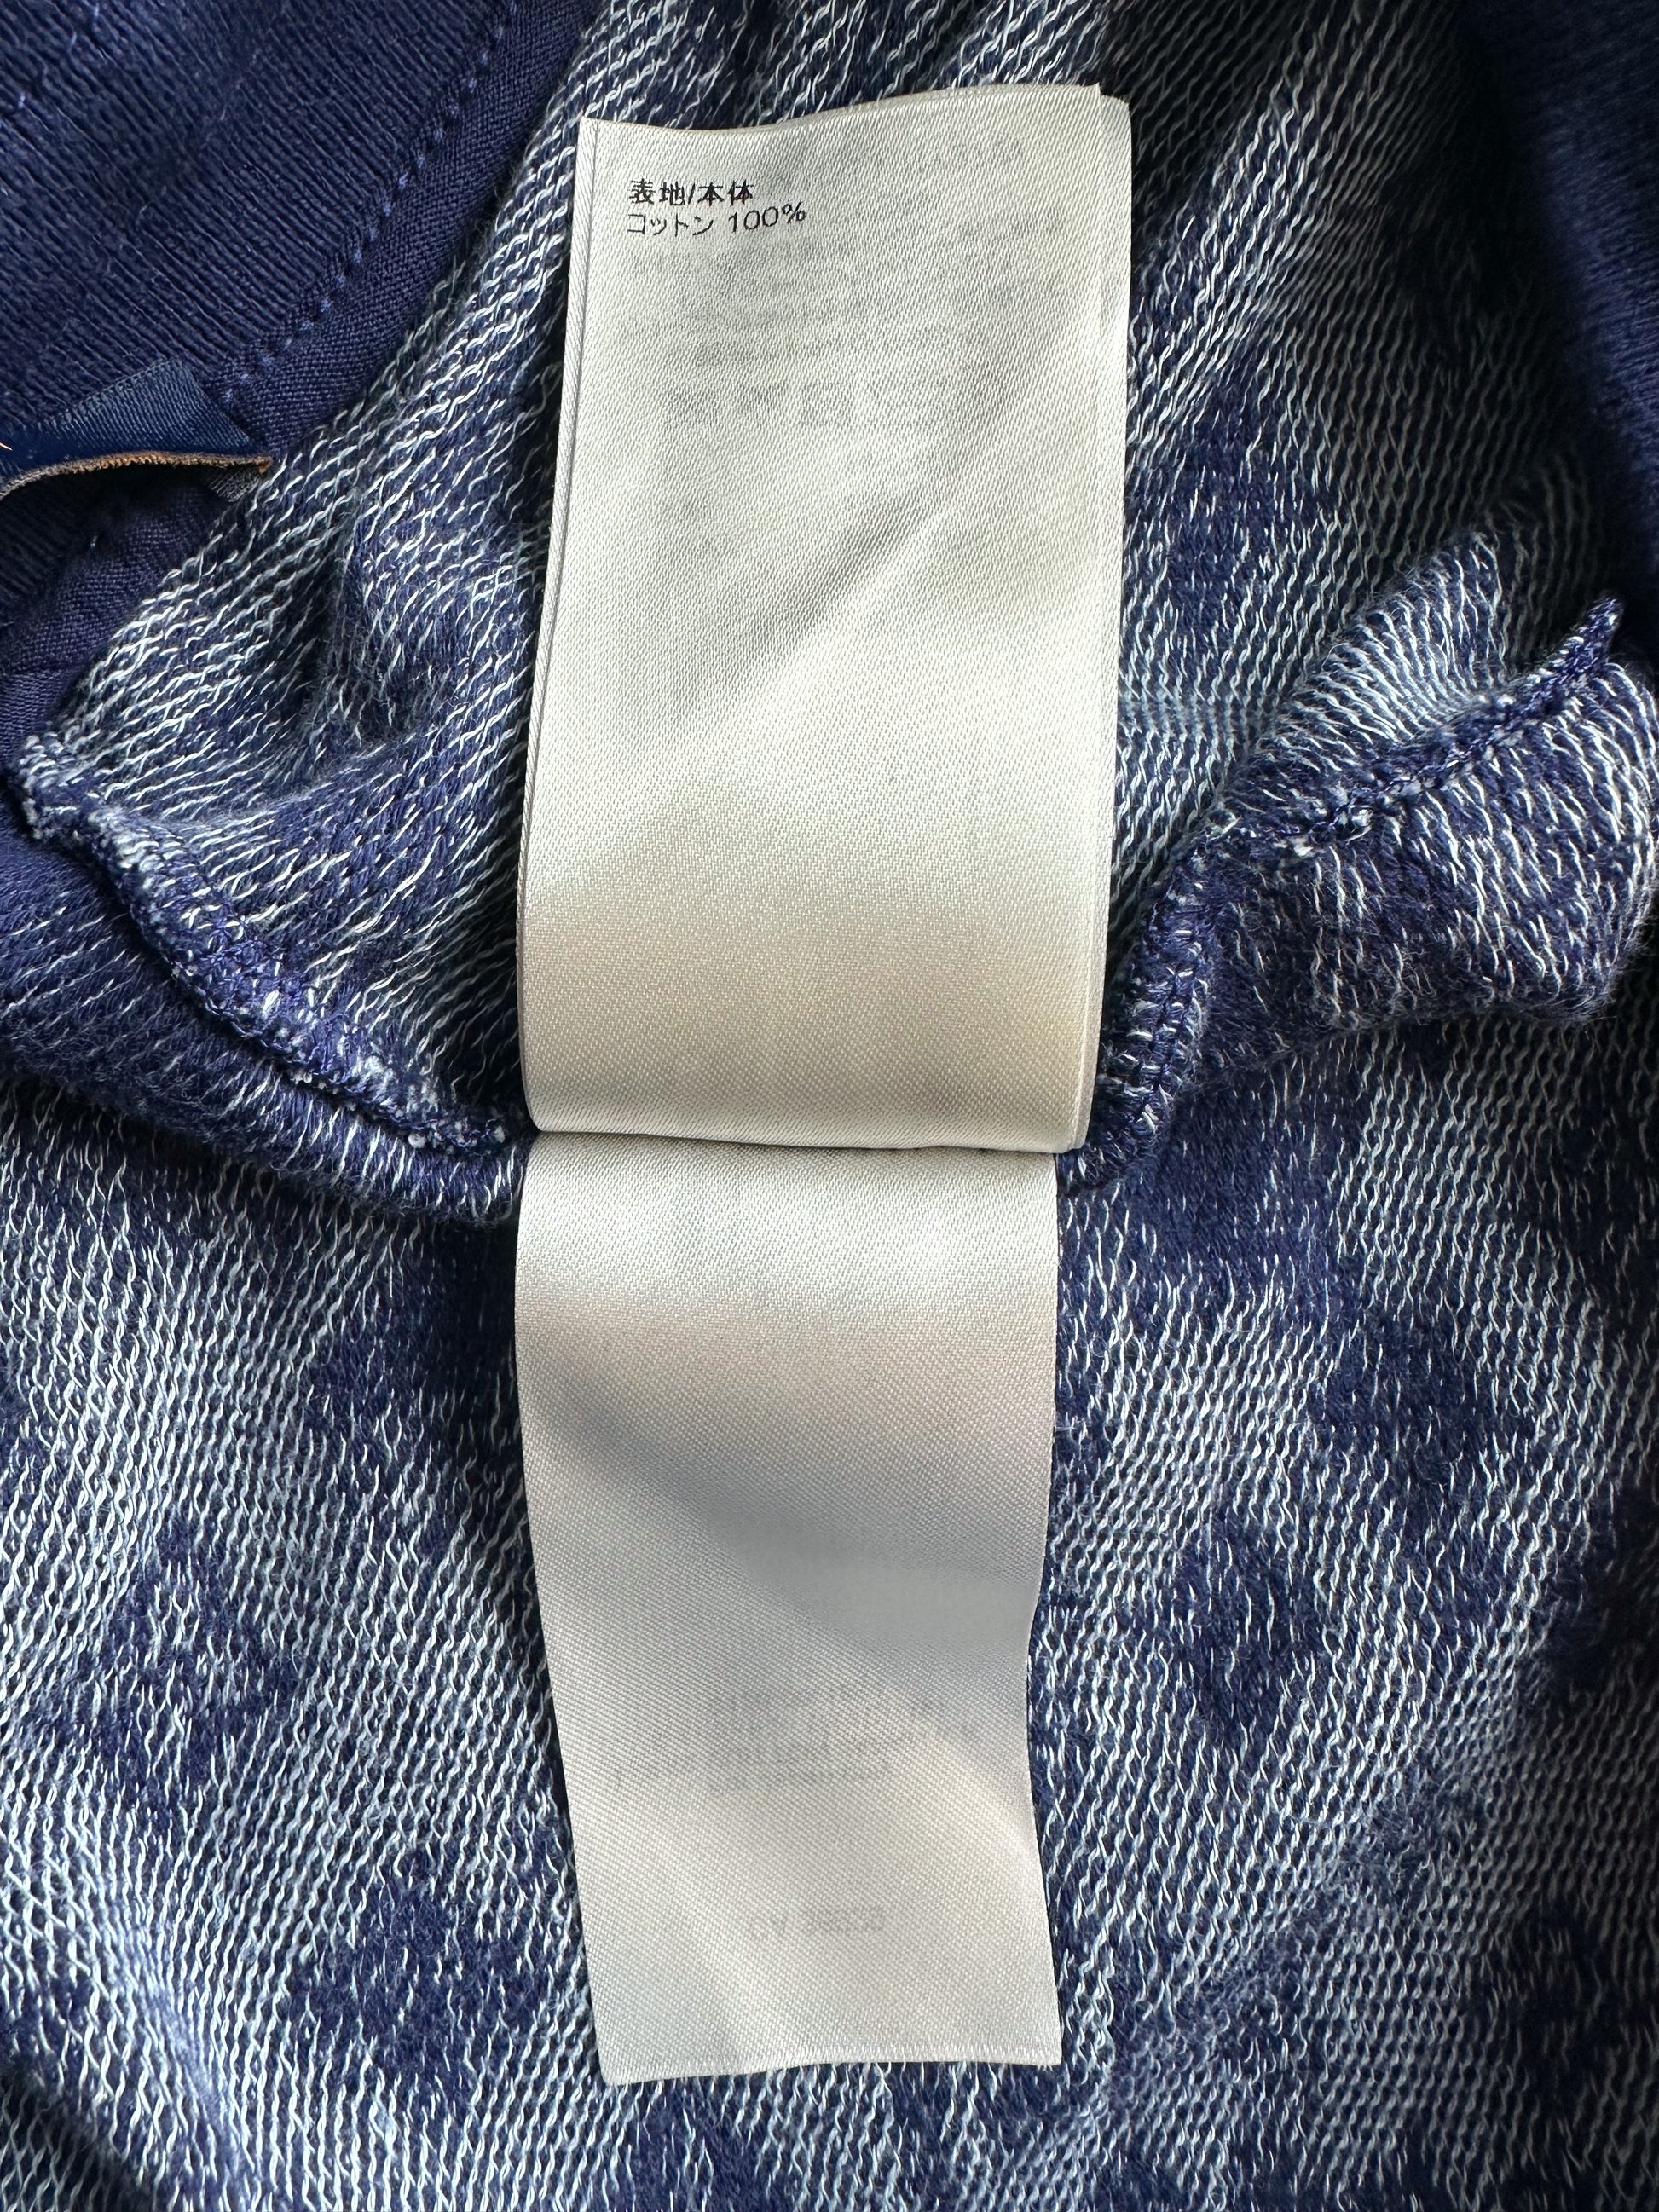 Louis Vuitton Blue Bleached Bandana Monogram Swim Shorts